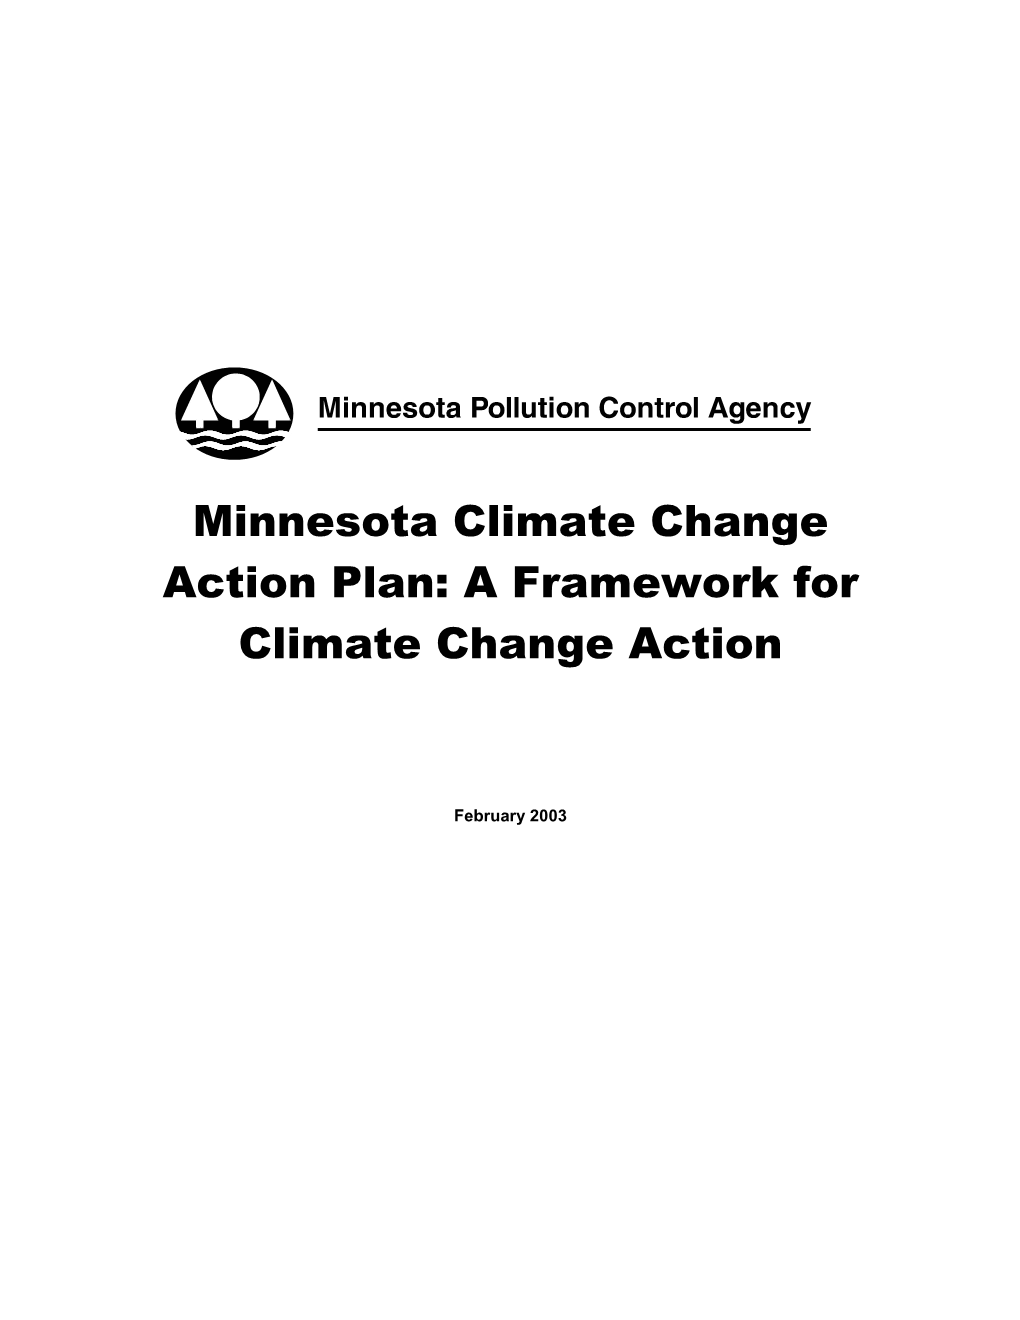 Minnesota Climate Change Action Plan: a Framework for Climate Change Action